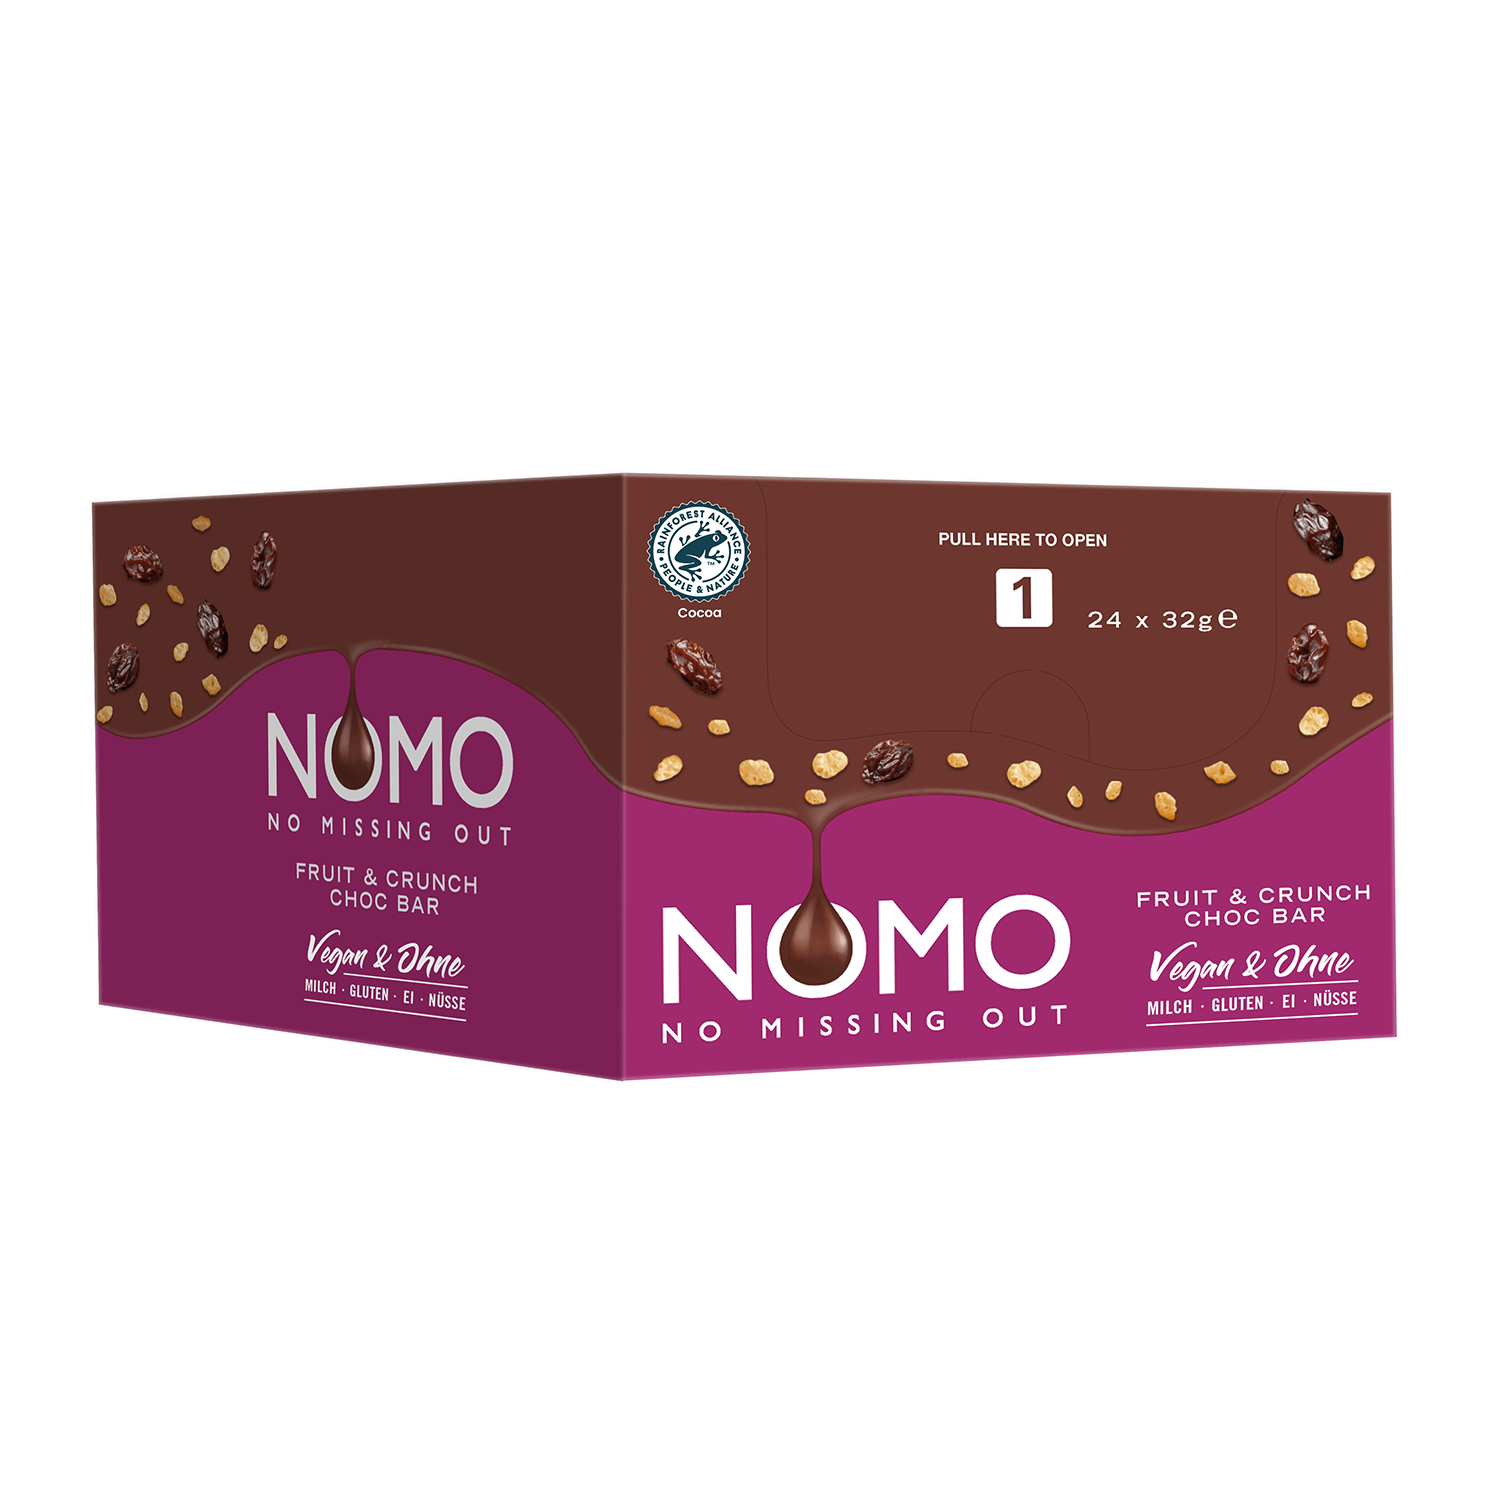 Nomo Fruit Crunch Schokoriegel. NOMO - NO MISSING OUT. Vegane Schokolade. Vegane Schokoriegel. Glutenfrei, Eifrei, Milchfrei, laktosefrei, Nussfrei. Nachhaltige Schokolade